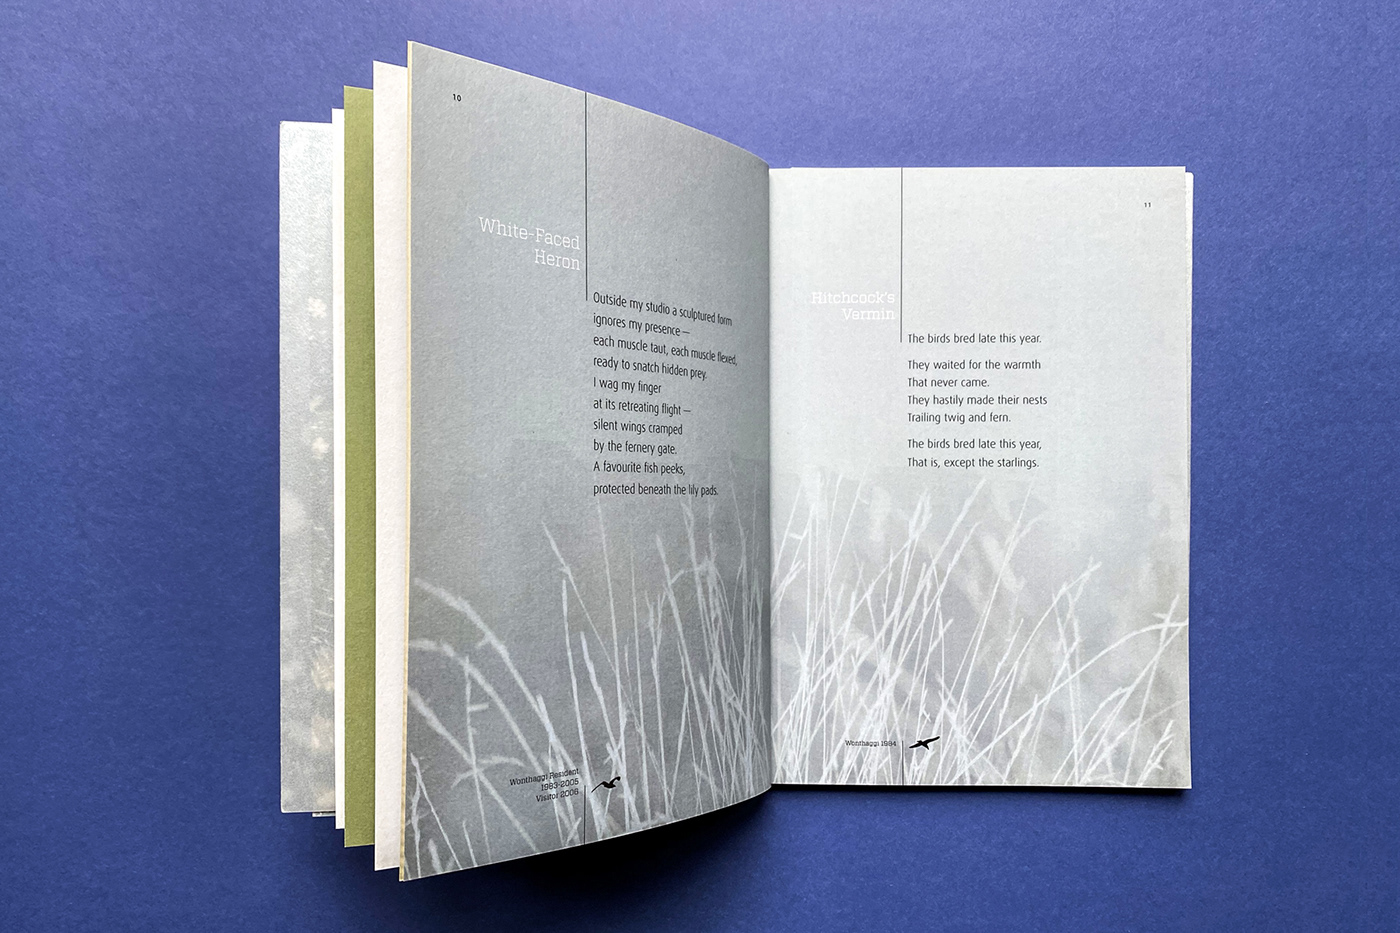 art direction  book design design Imaging eltham Hanging Rock TESS EDWARDS OSBORNE PENINSULA ROYAL FREEMASONS